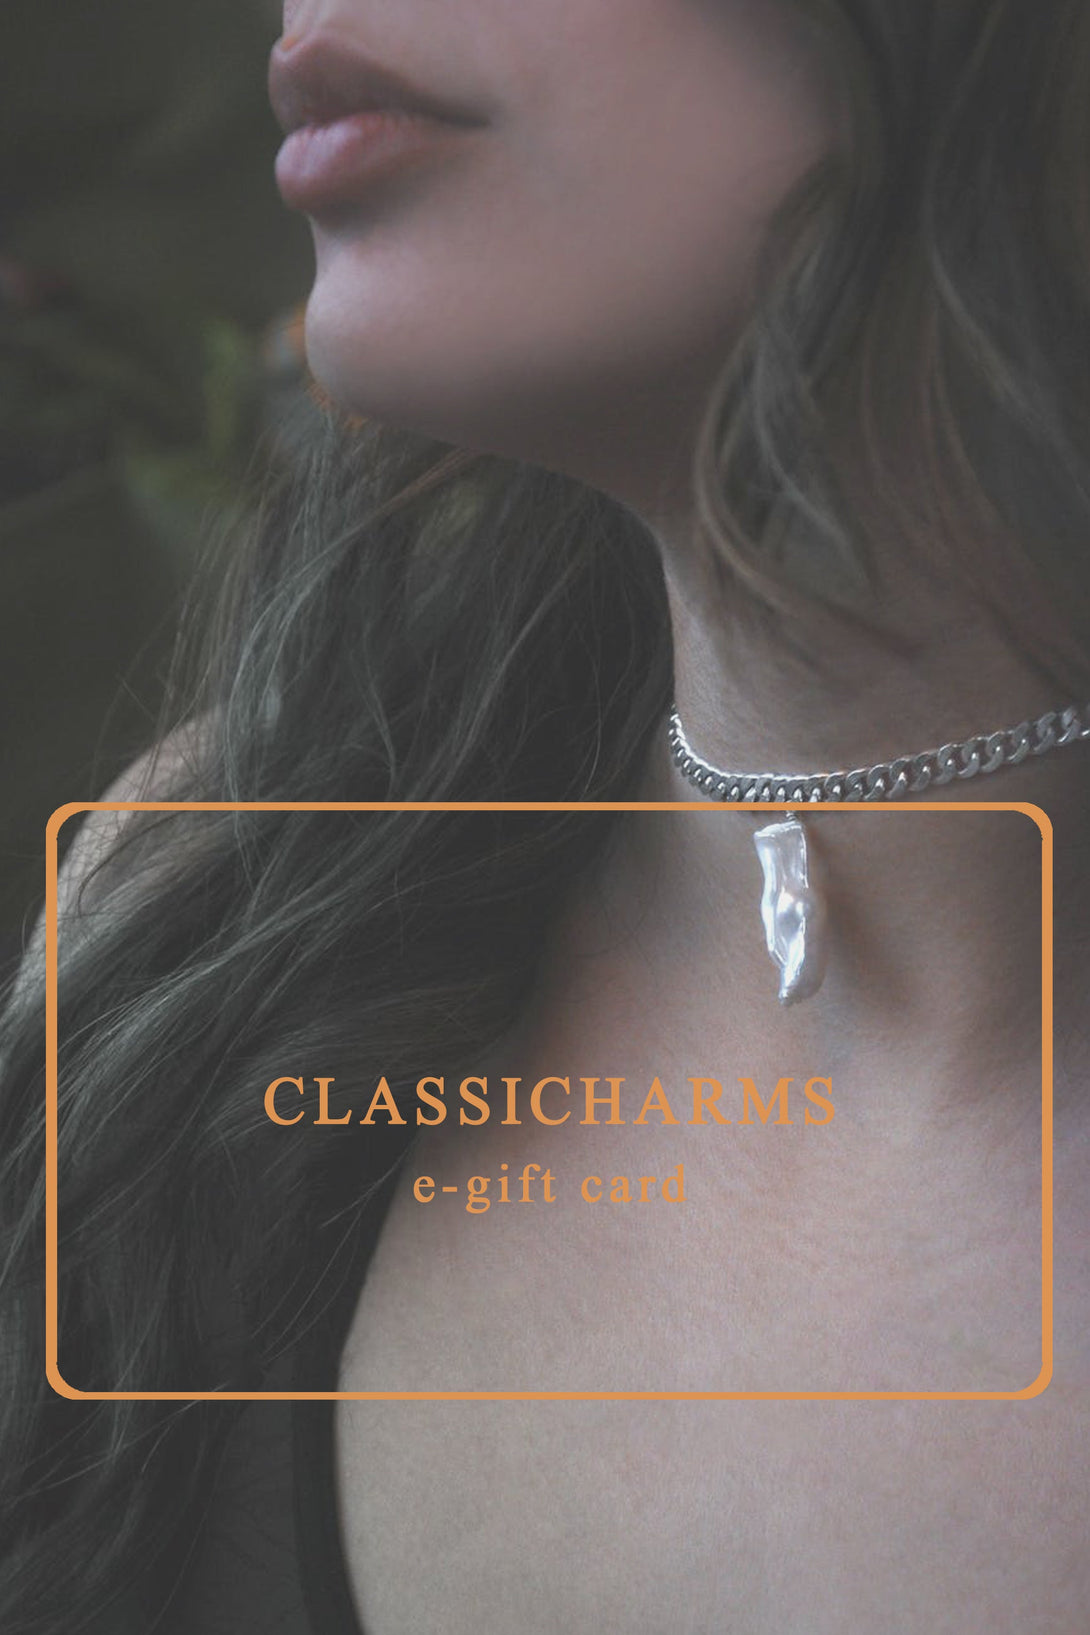 Classicharms E-Gift Card - Classicharms